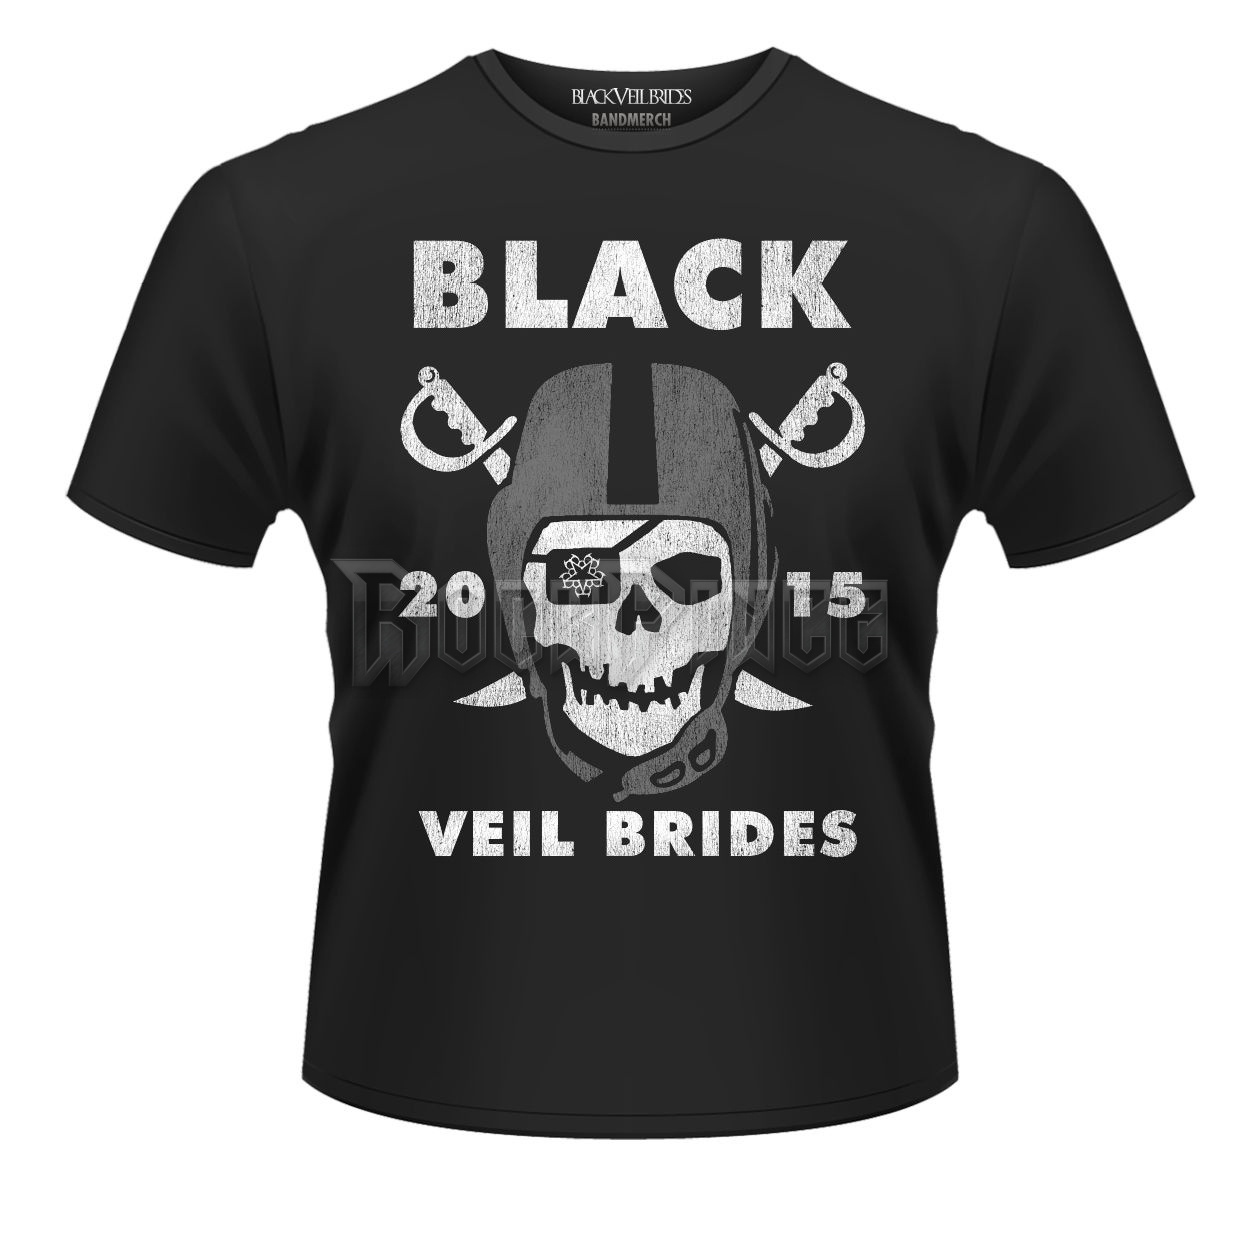 BLACK VEIL BRIDES - MARAUDERS - PH9364